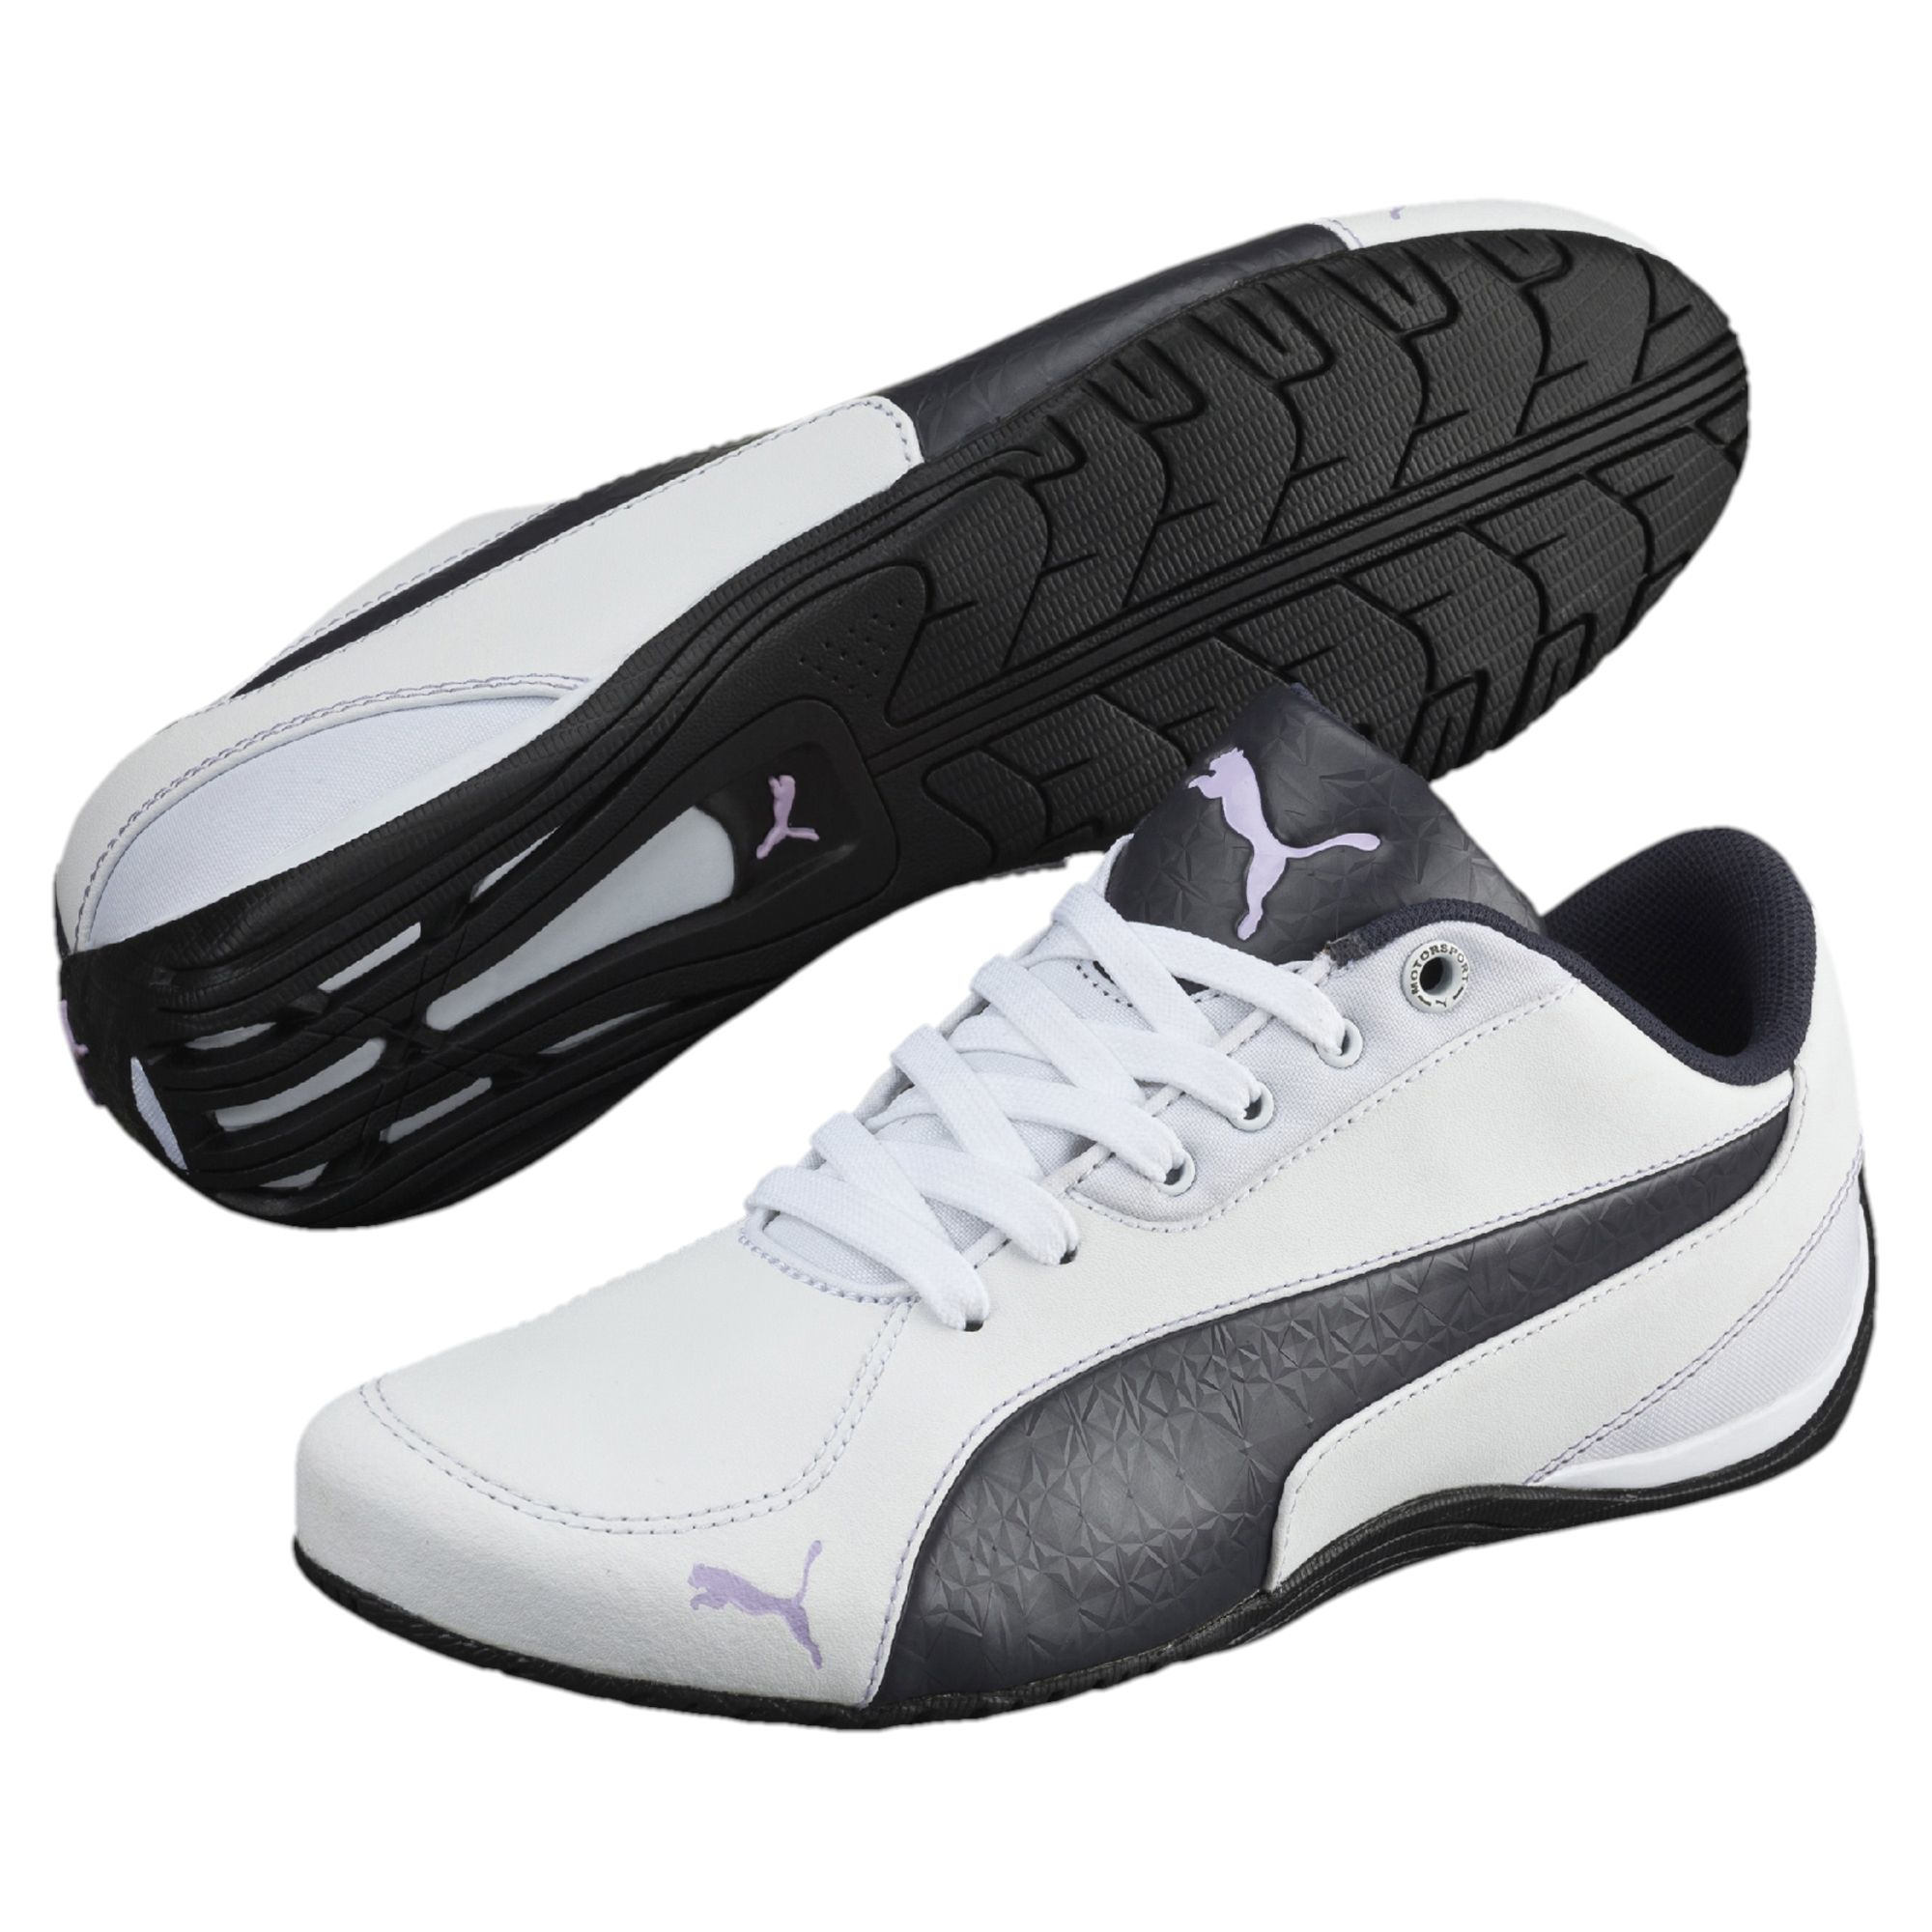 Lyst - PUMA Drift Cat 5 Nm 2 Women's Shoes in White